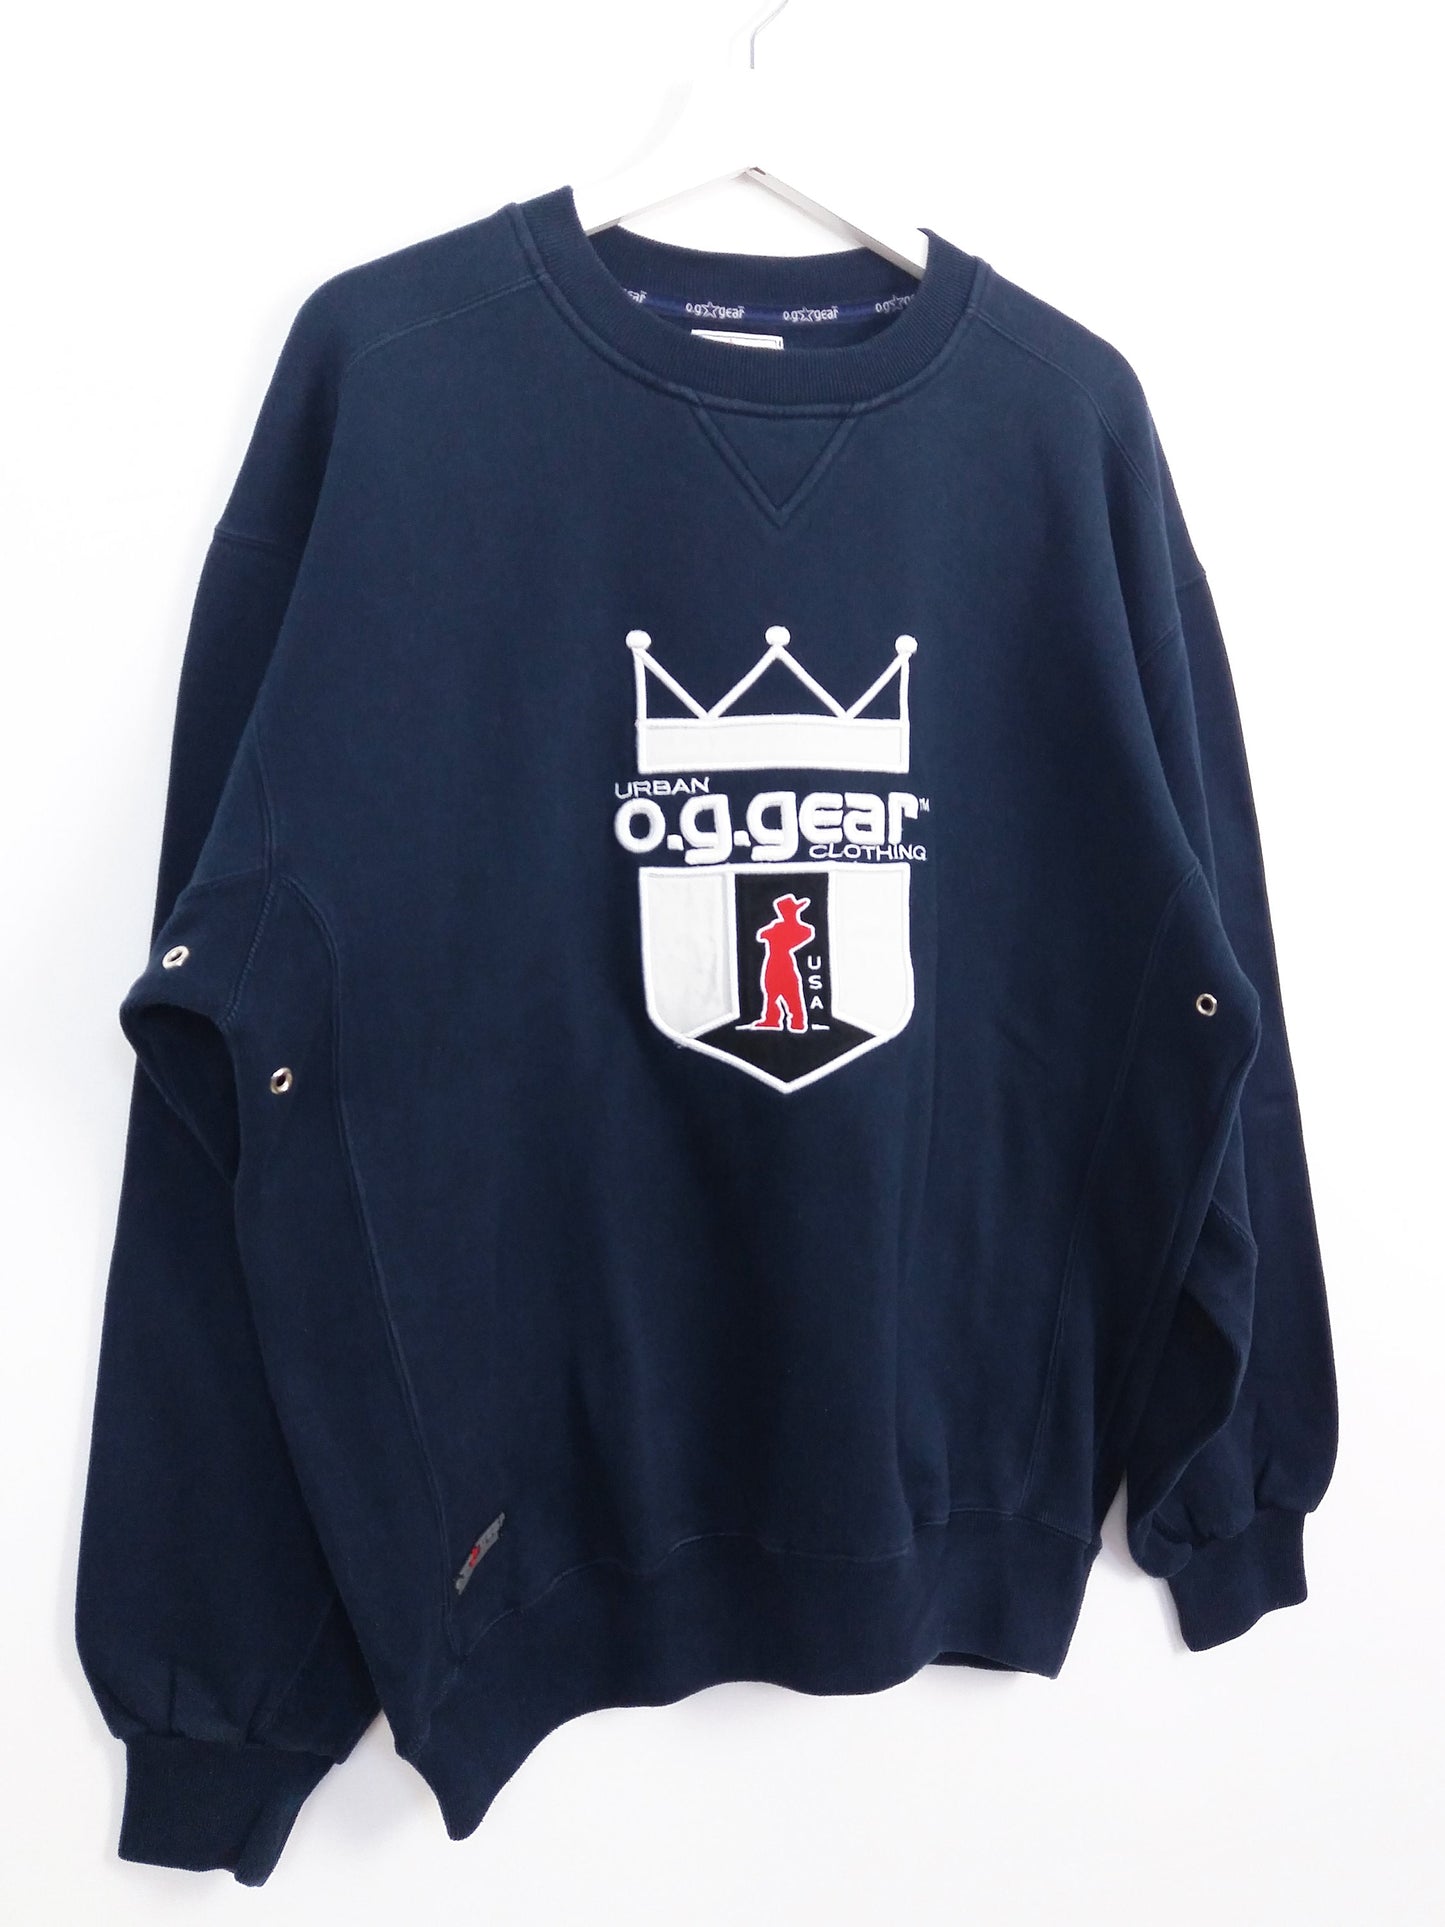 O.G. GEAR 90's Hip Hop Sweatshirt - size M